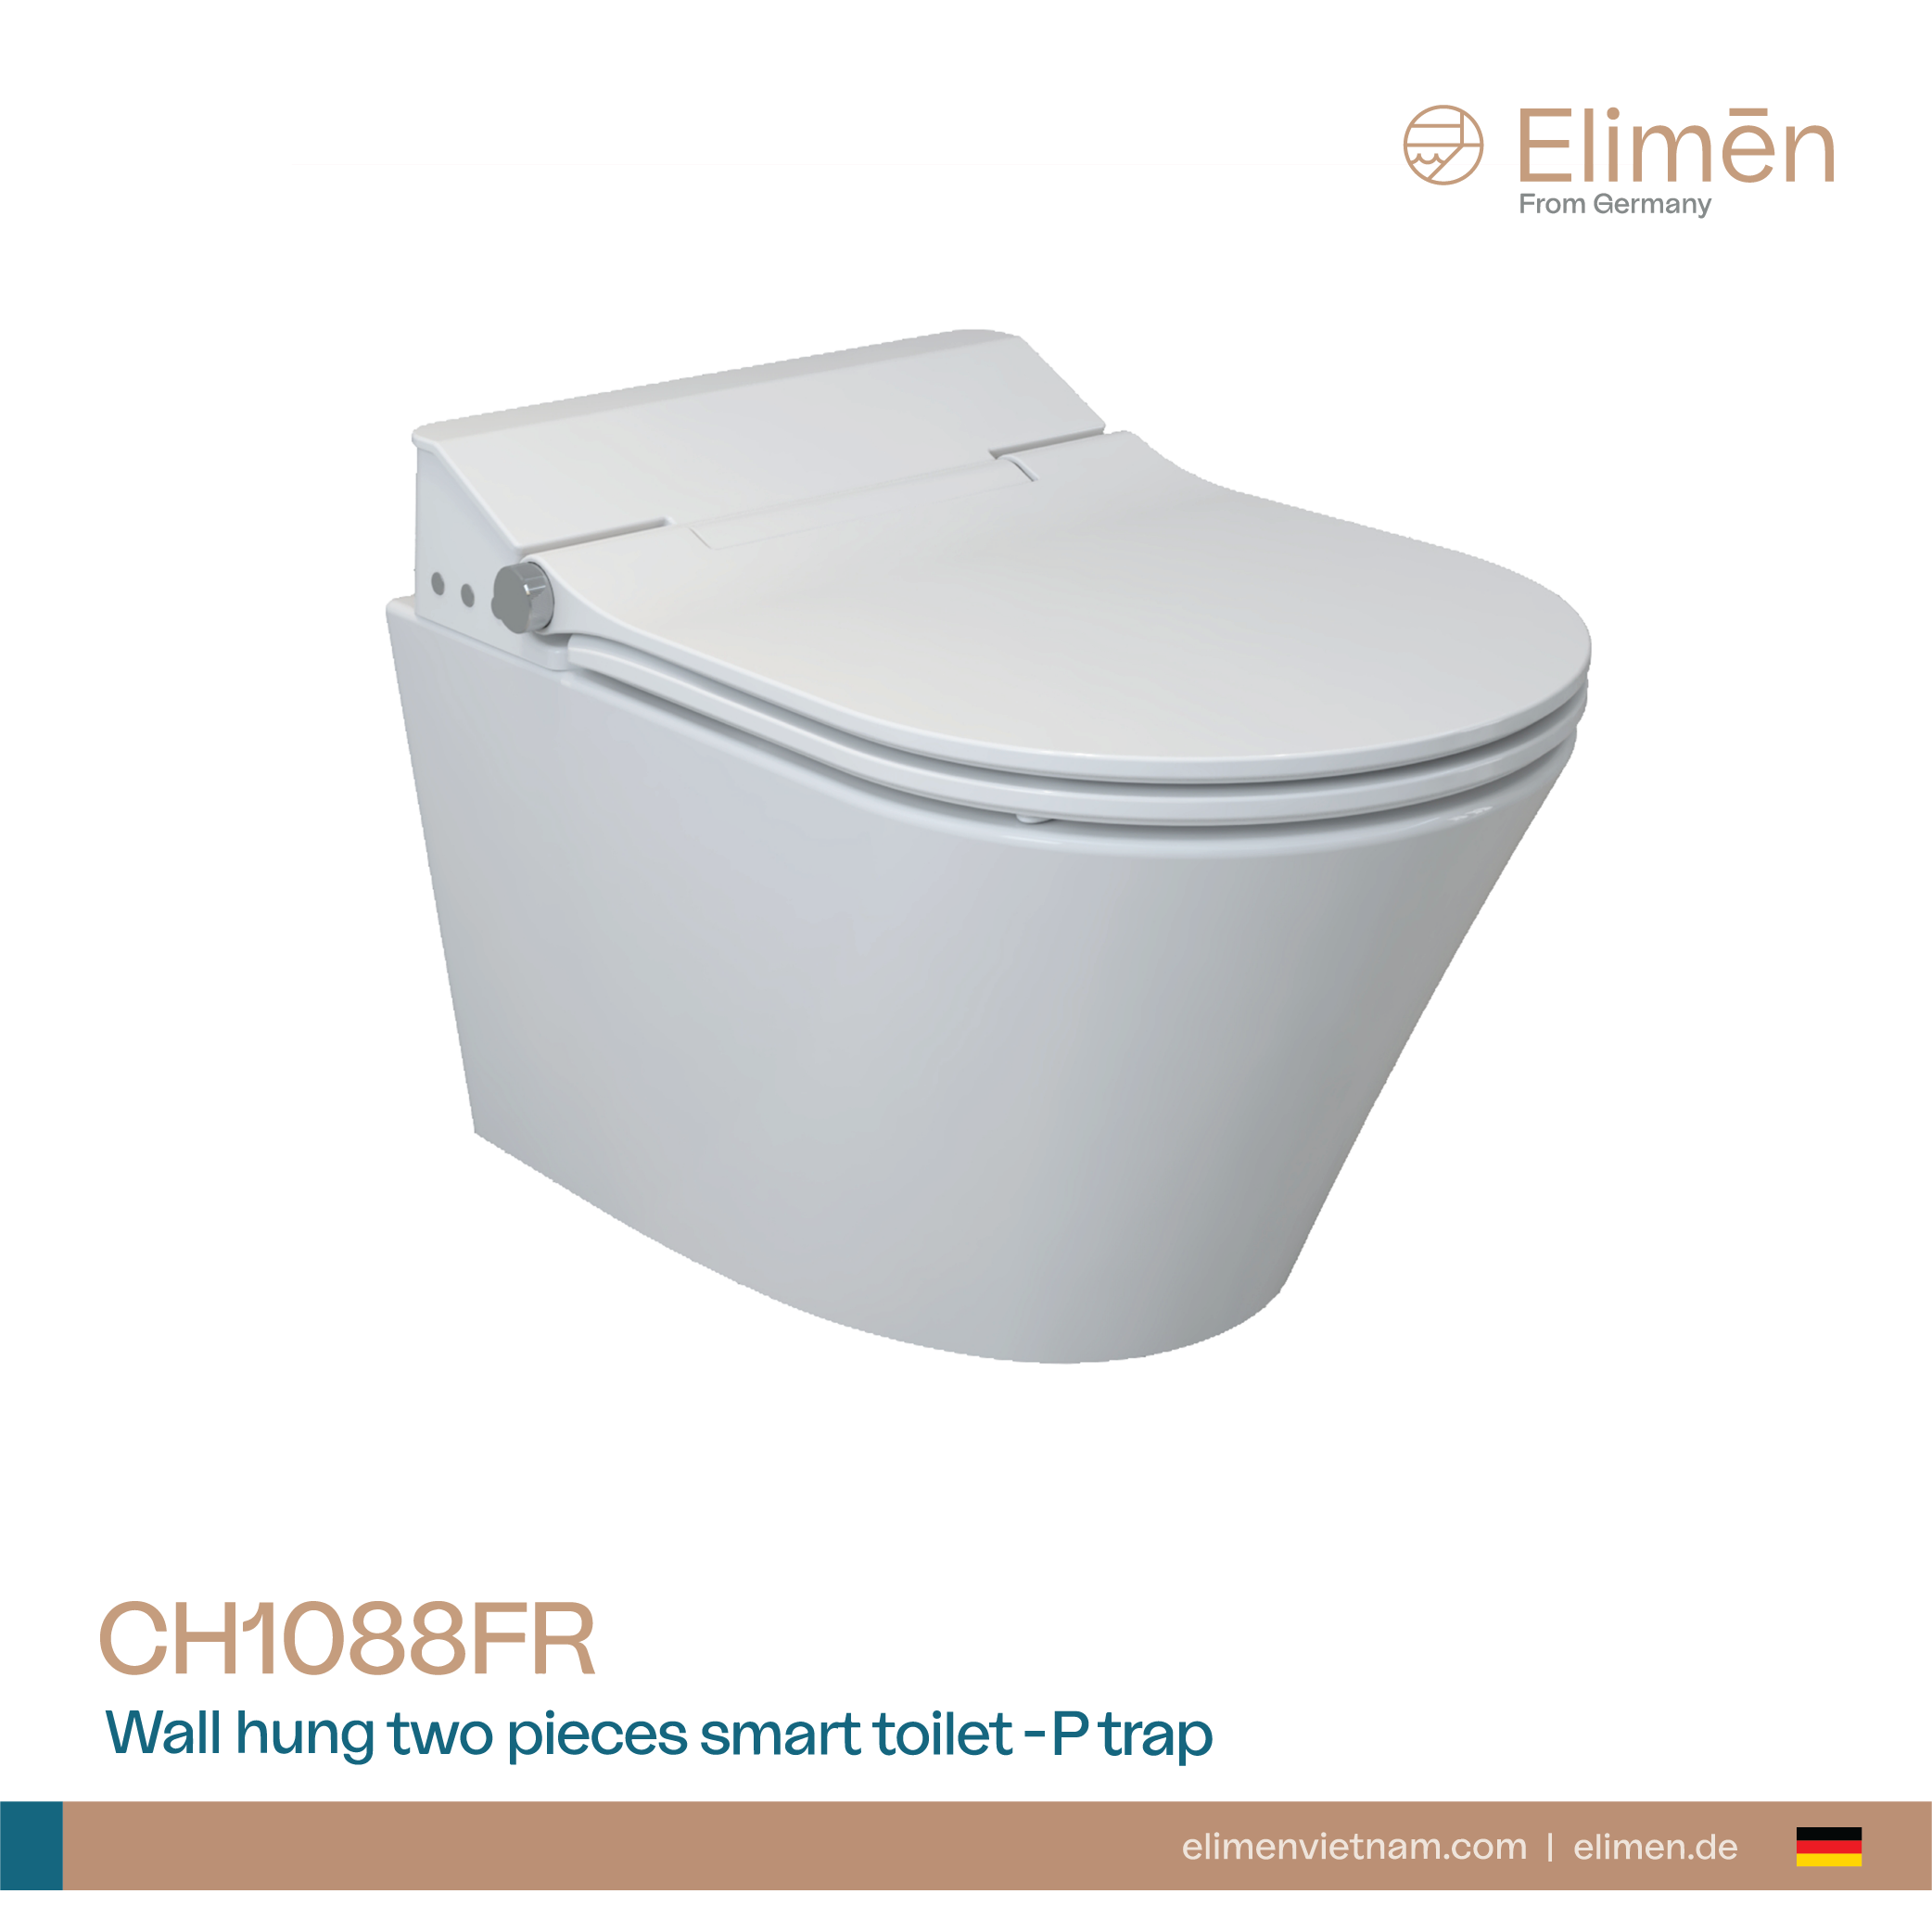 Elimen intelligent toilet - Code CH1088FR-305